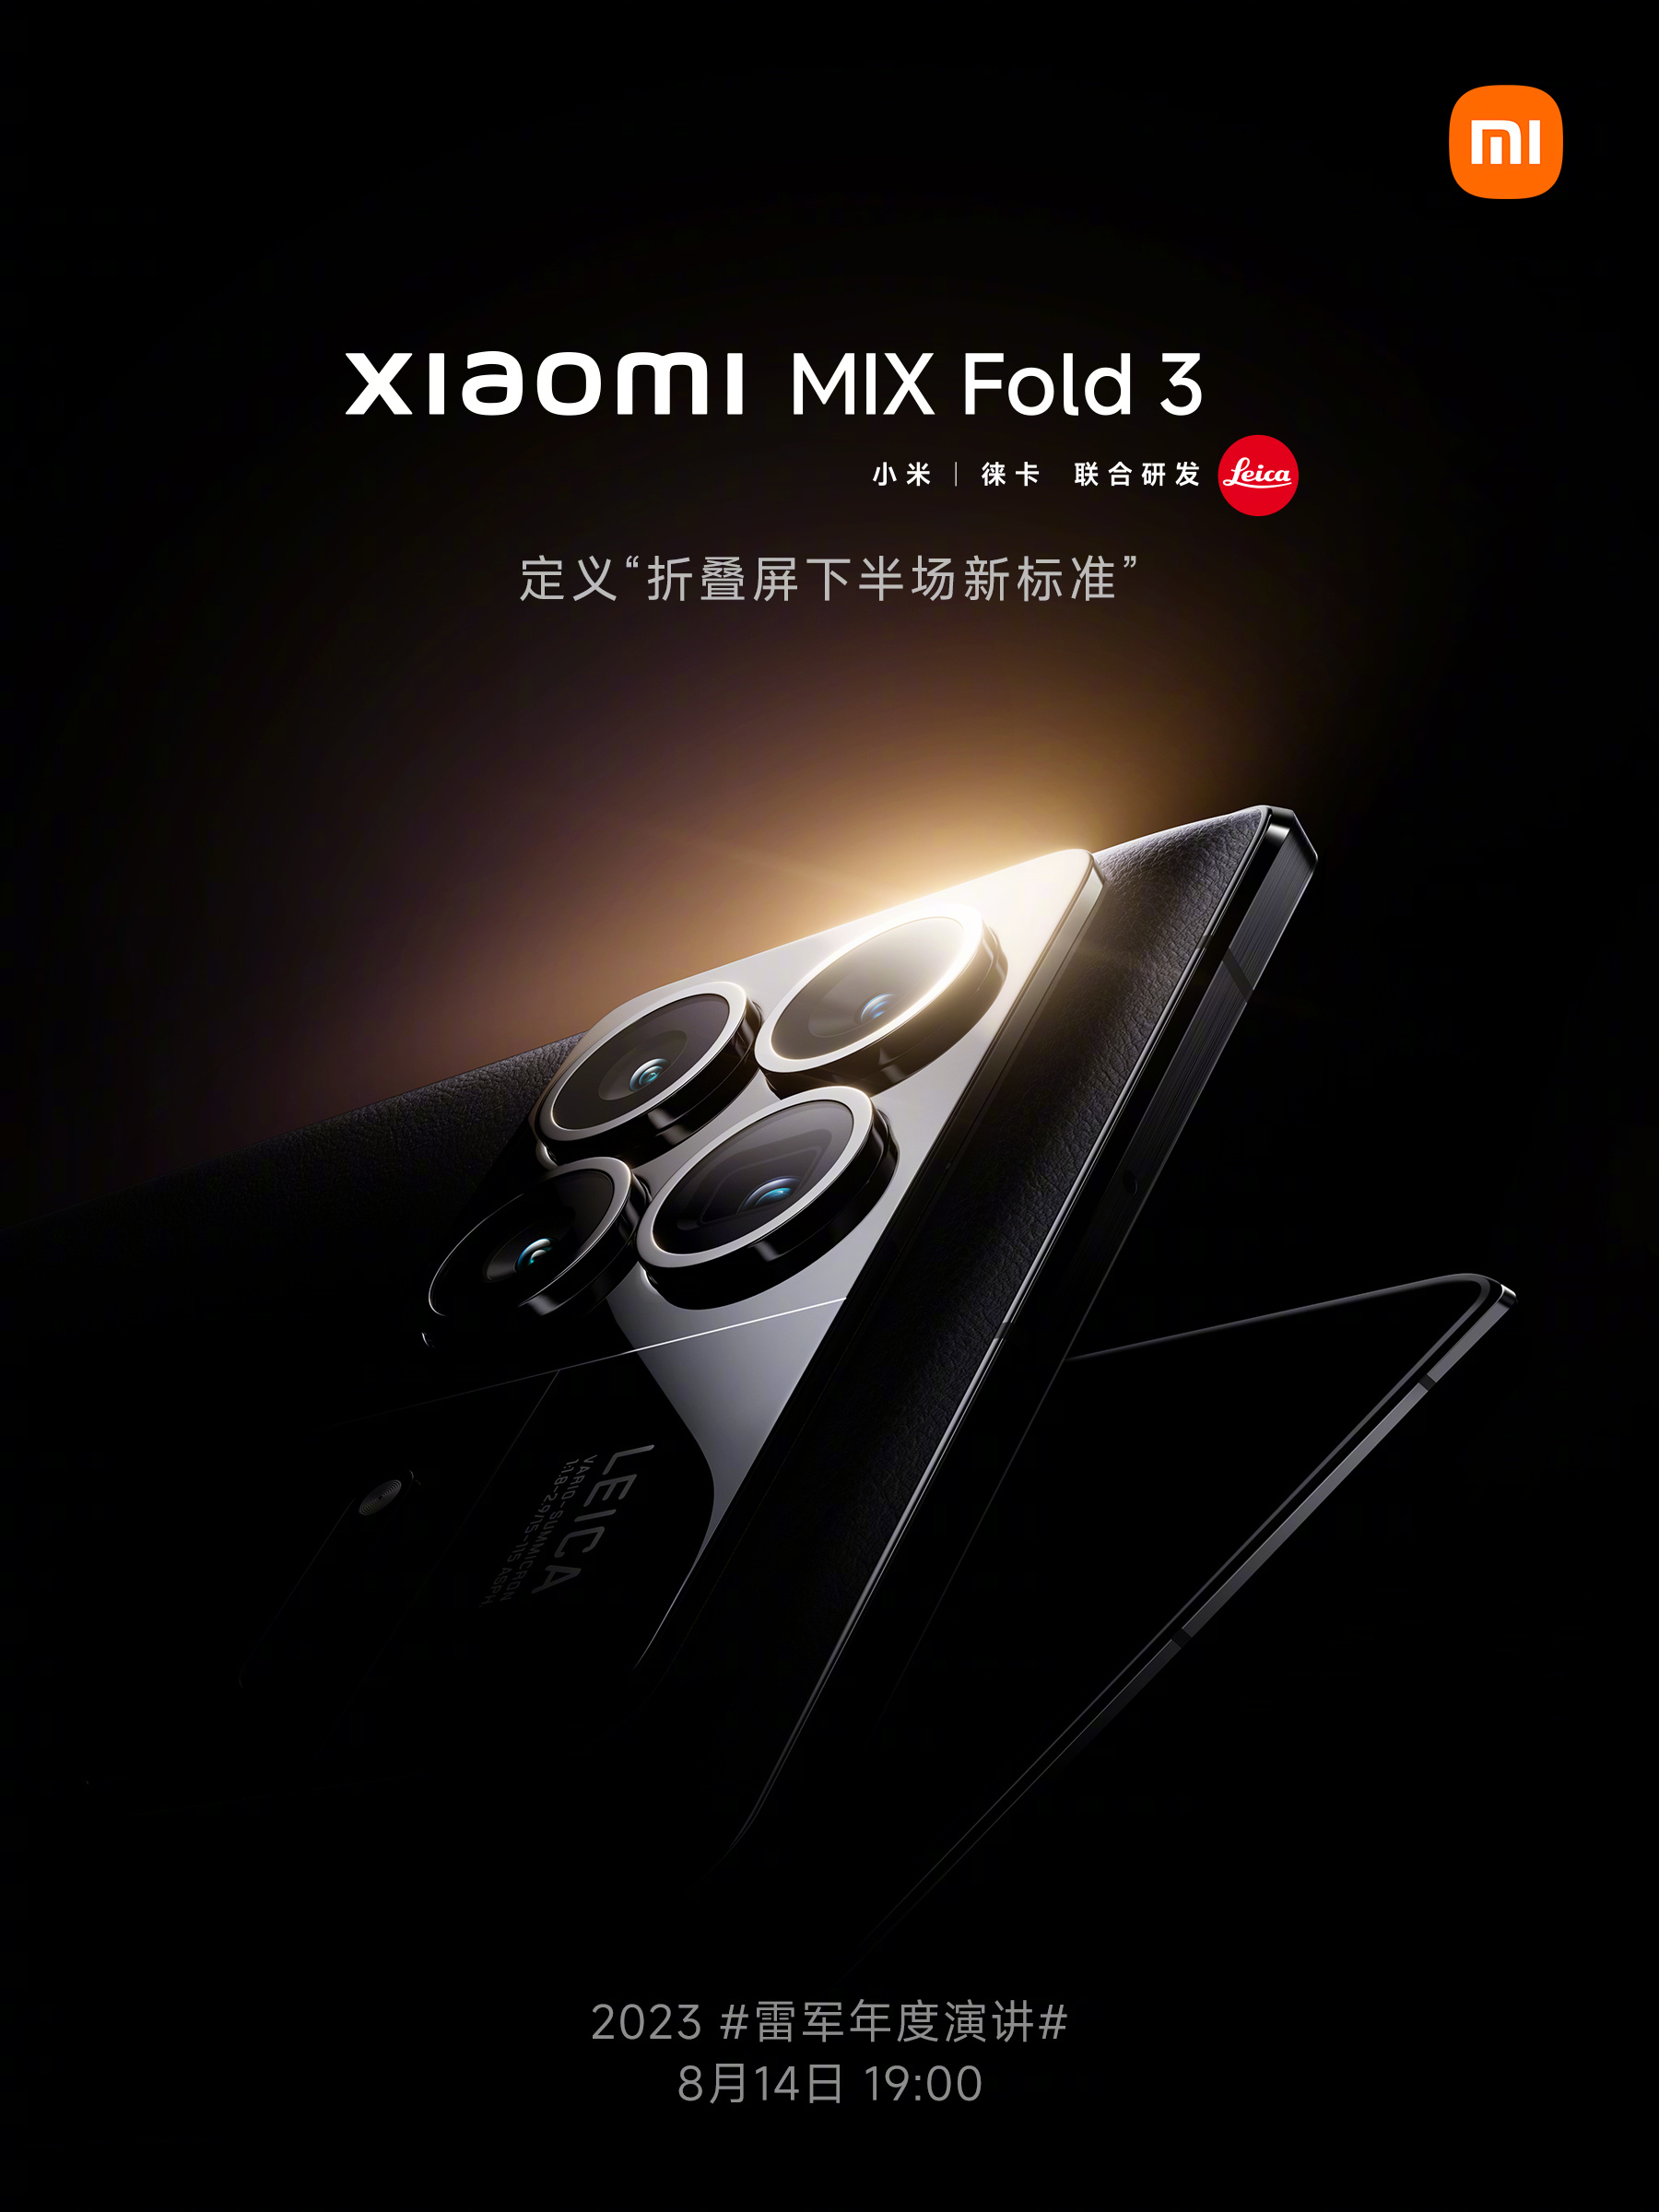 Xiaomi Mix Fold 3 görüntüleri